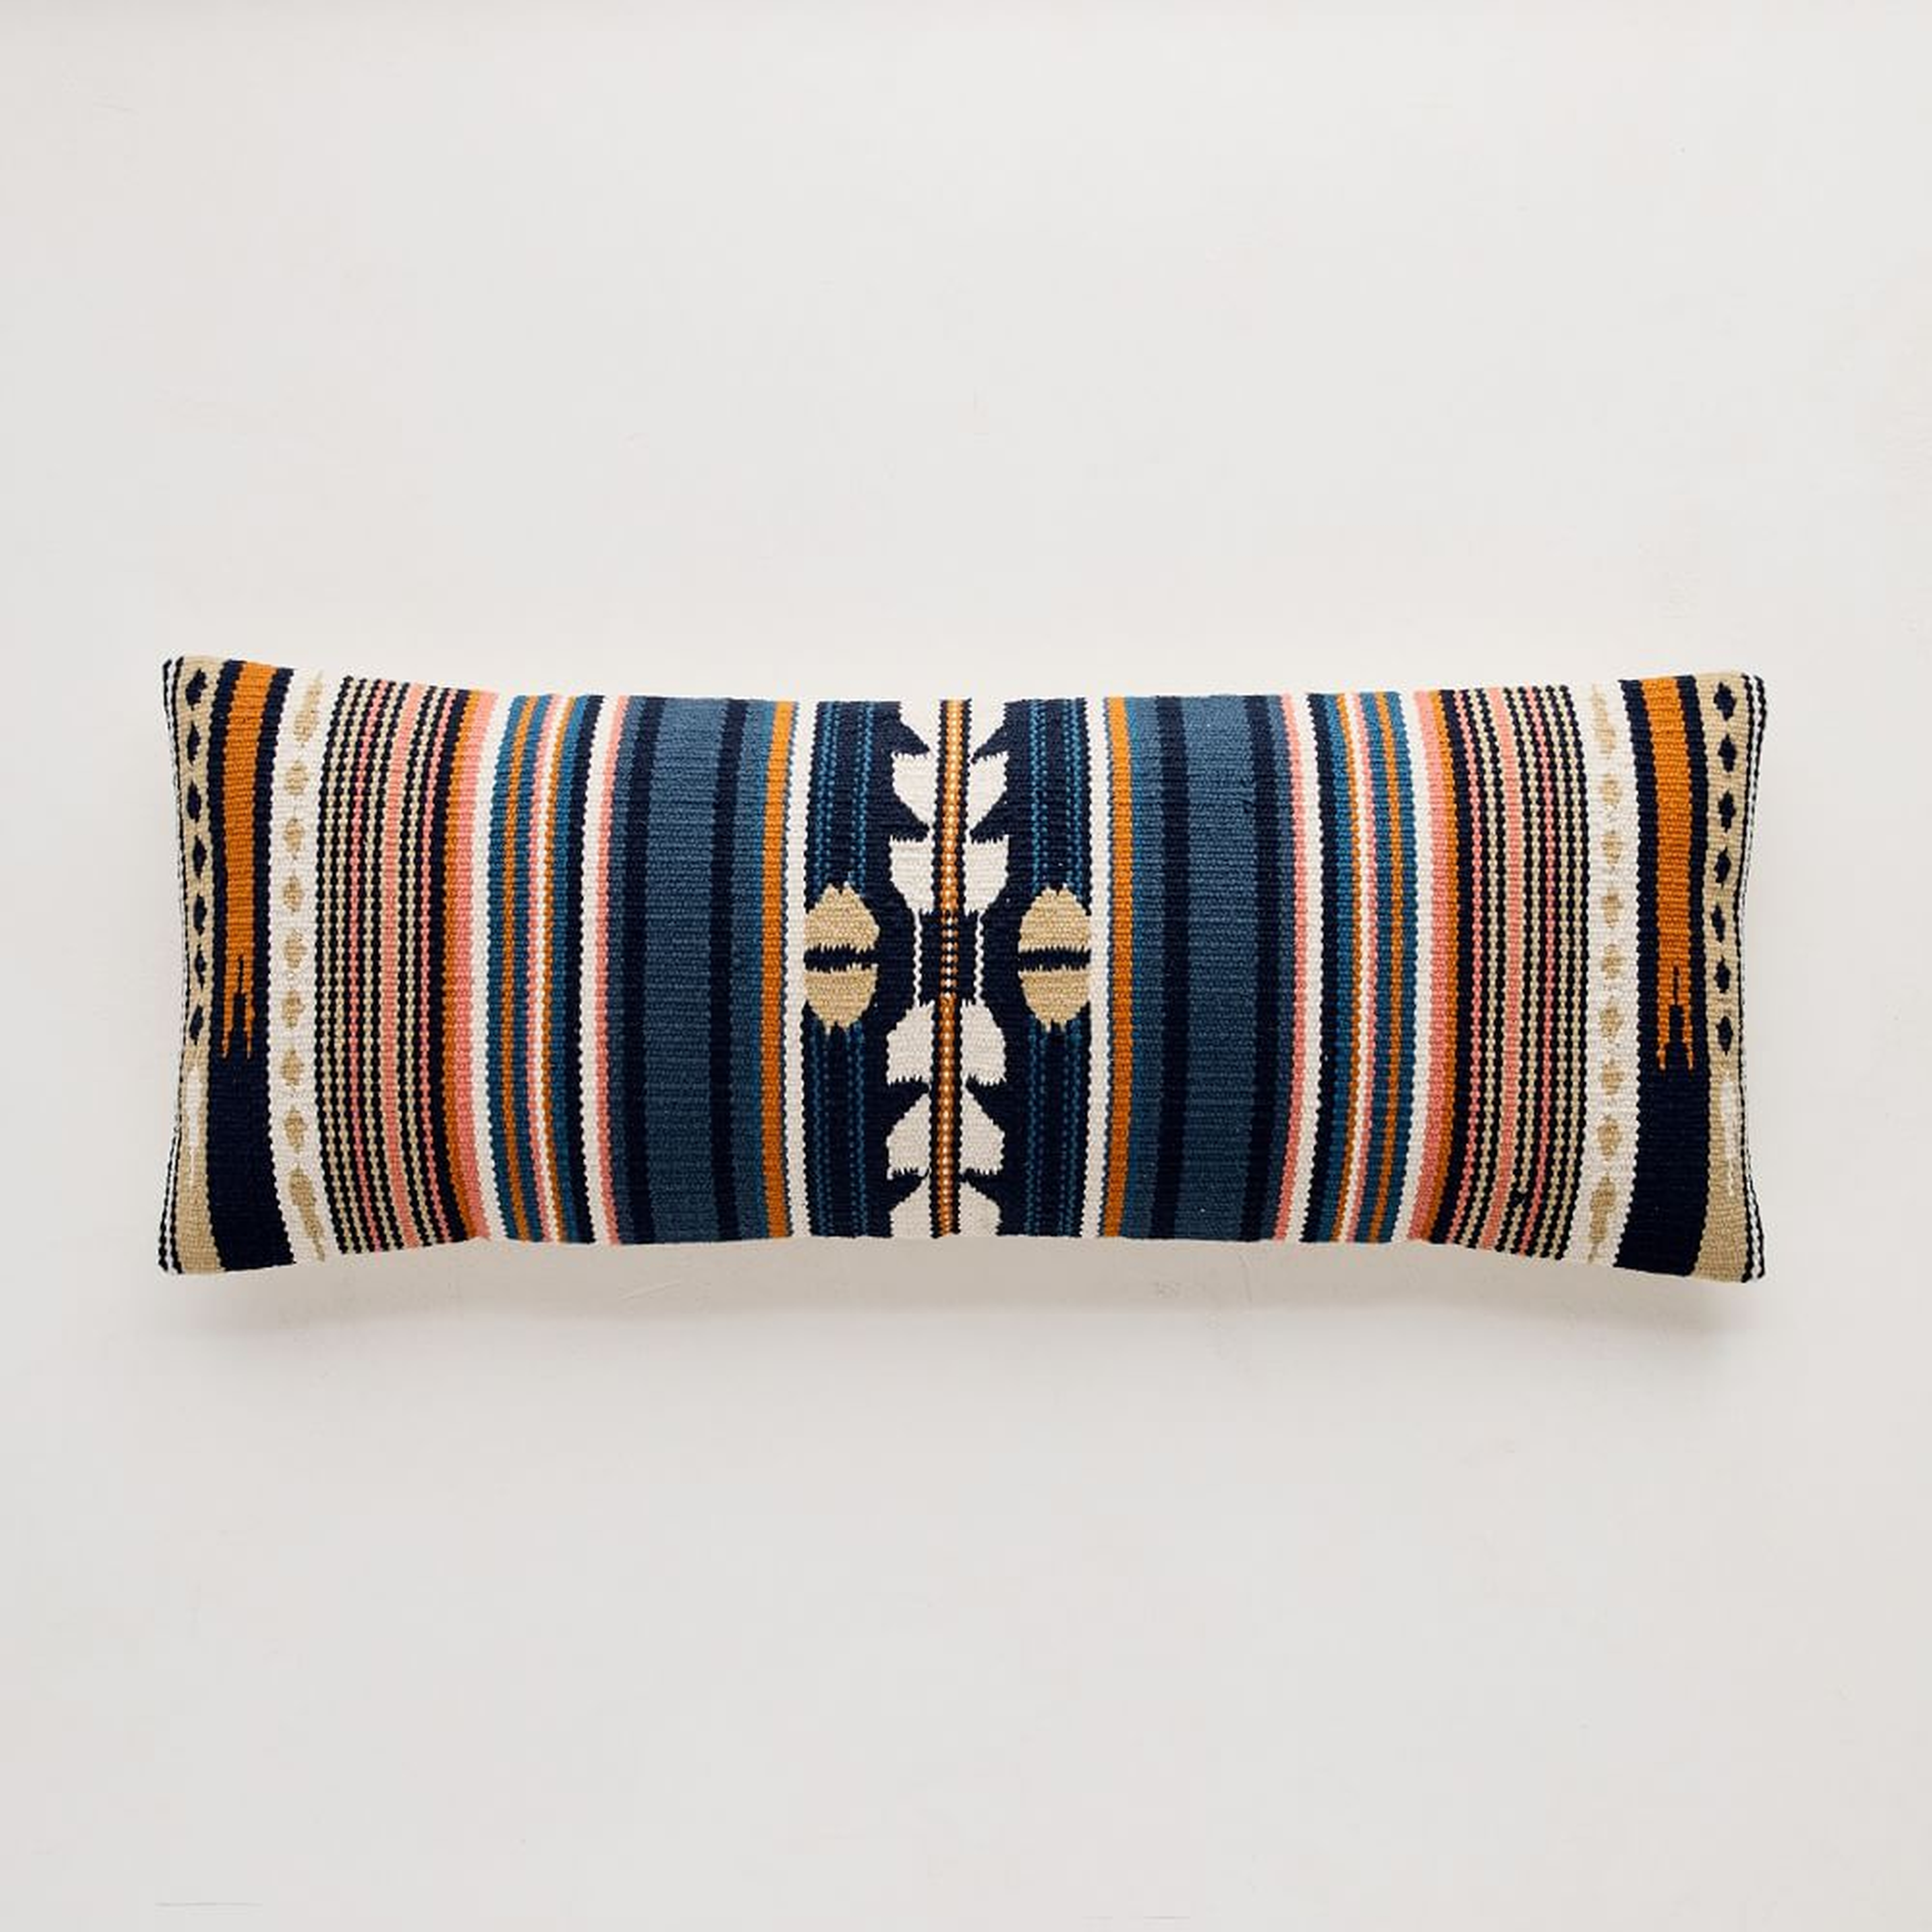 Woven Baja Pillow Cover, 14"x36", Midnight - West Elm